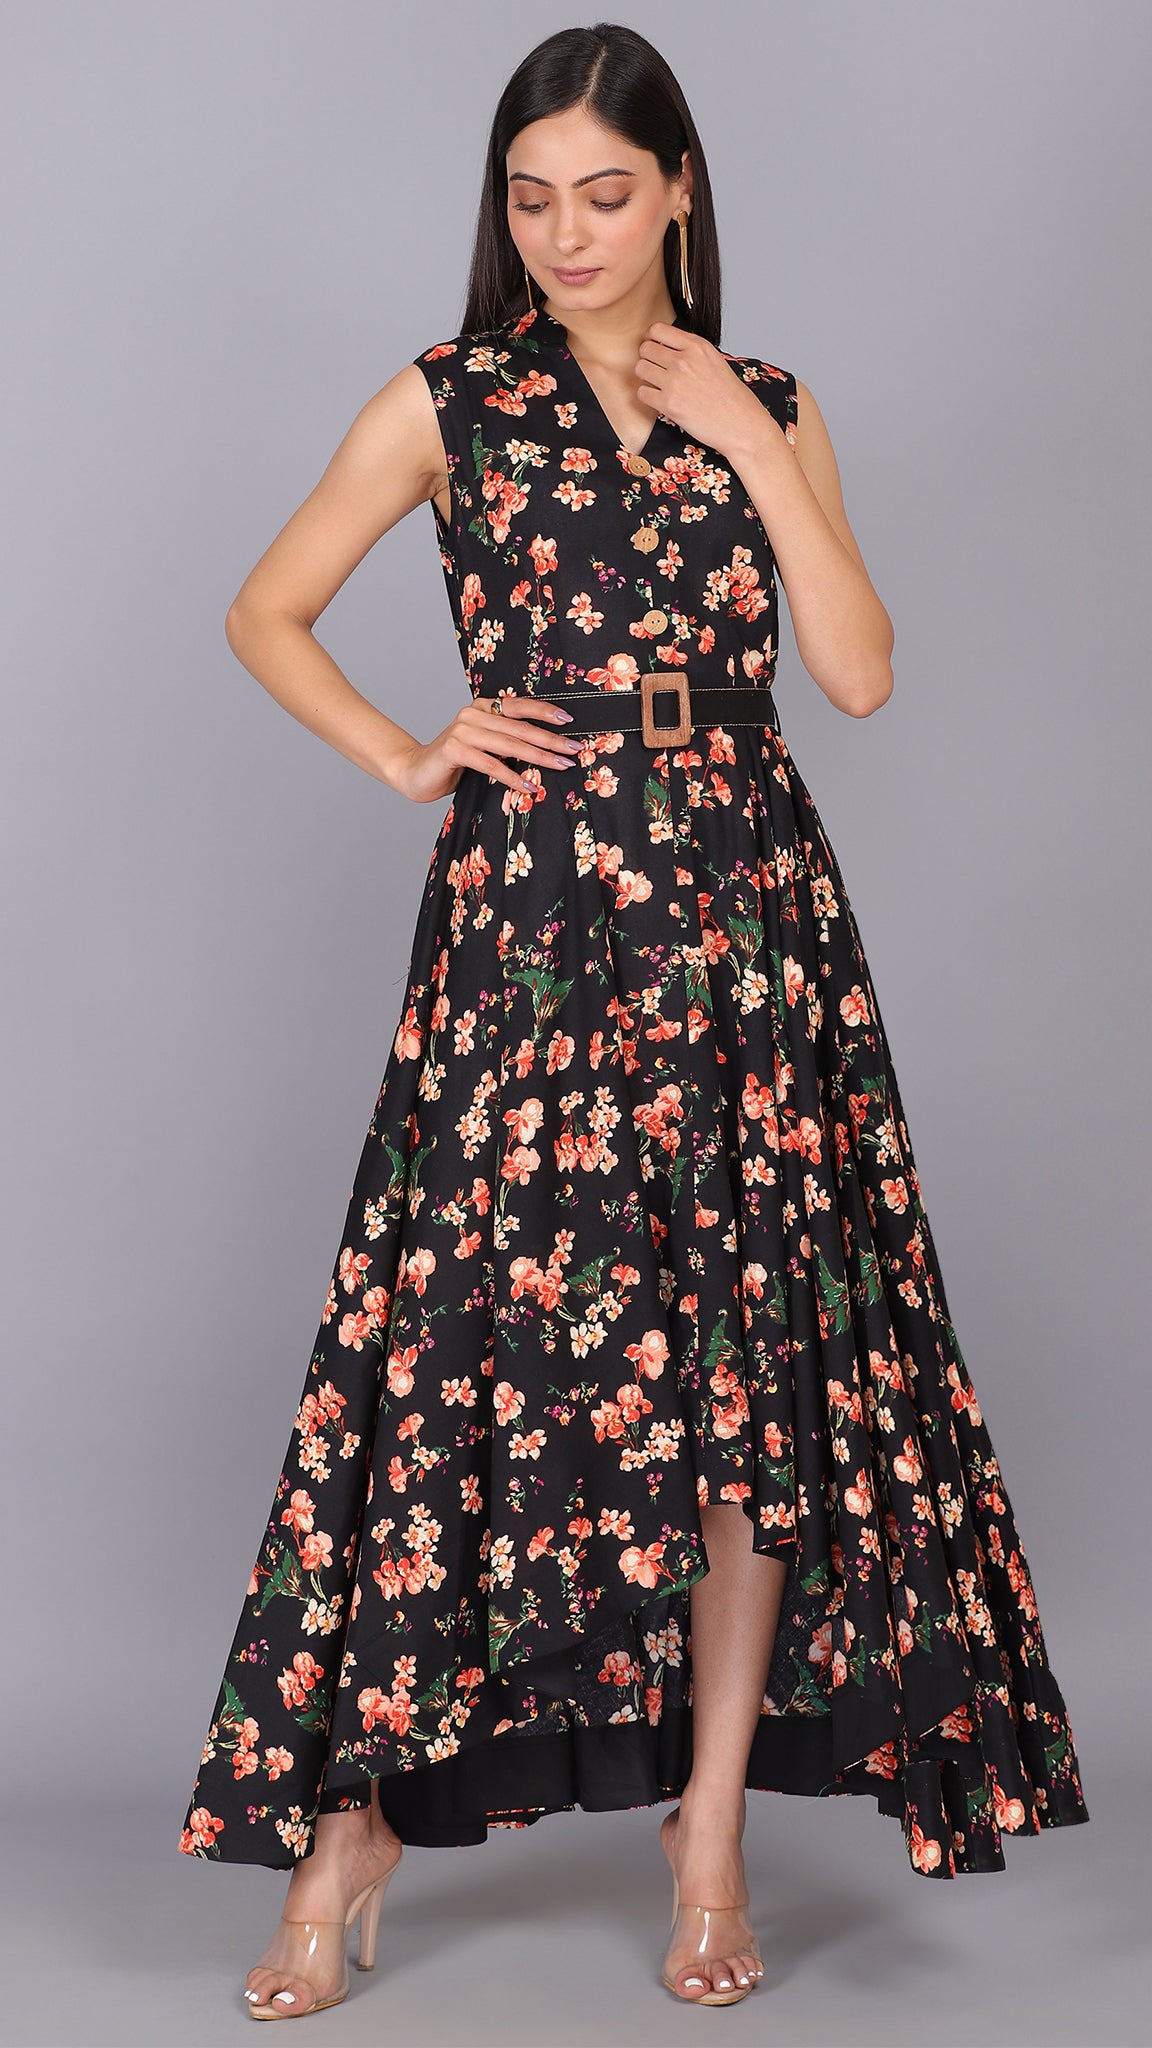 Cute Floral Dress - Black Dress - Wrap Dress - Casual Dress - Lulus